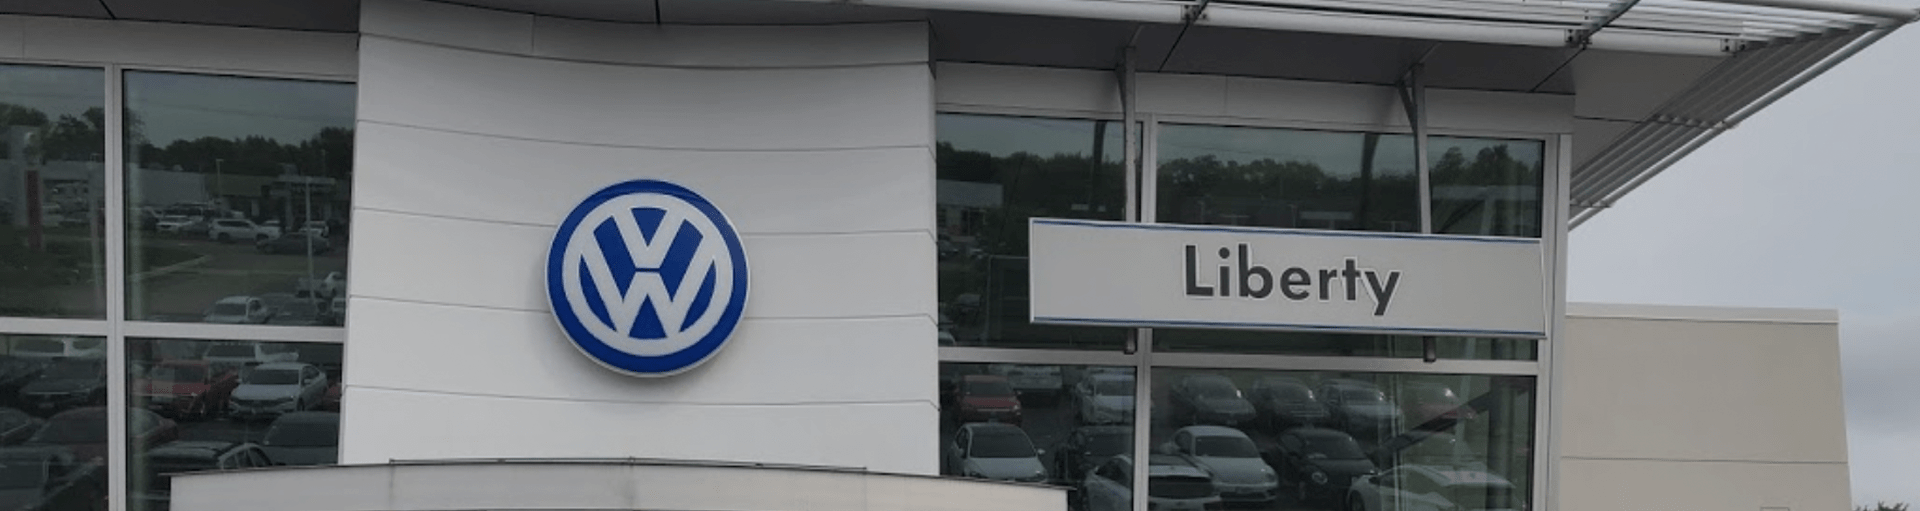 Libertyville Volkswagen Windshield Wiper Blade Replacement Service